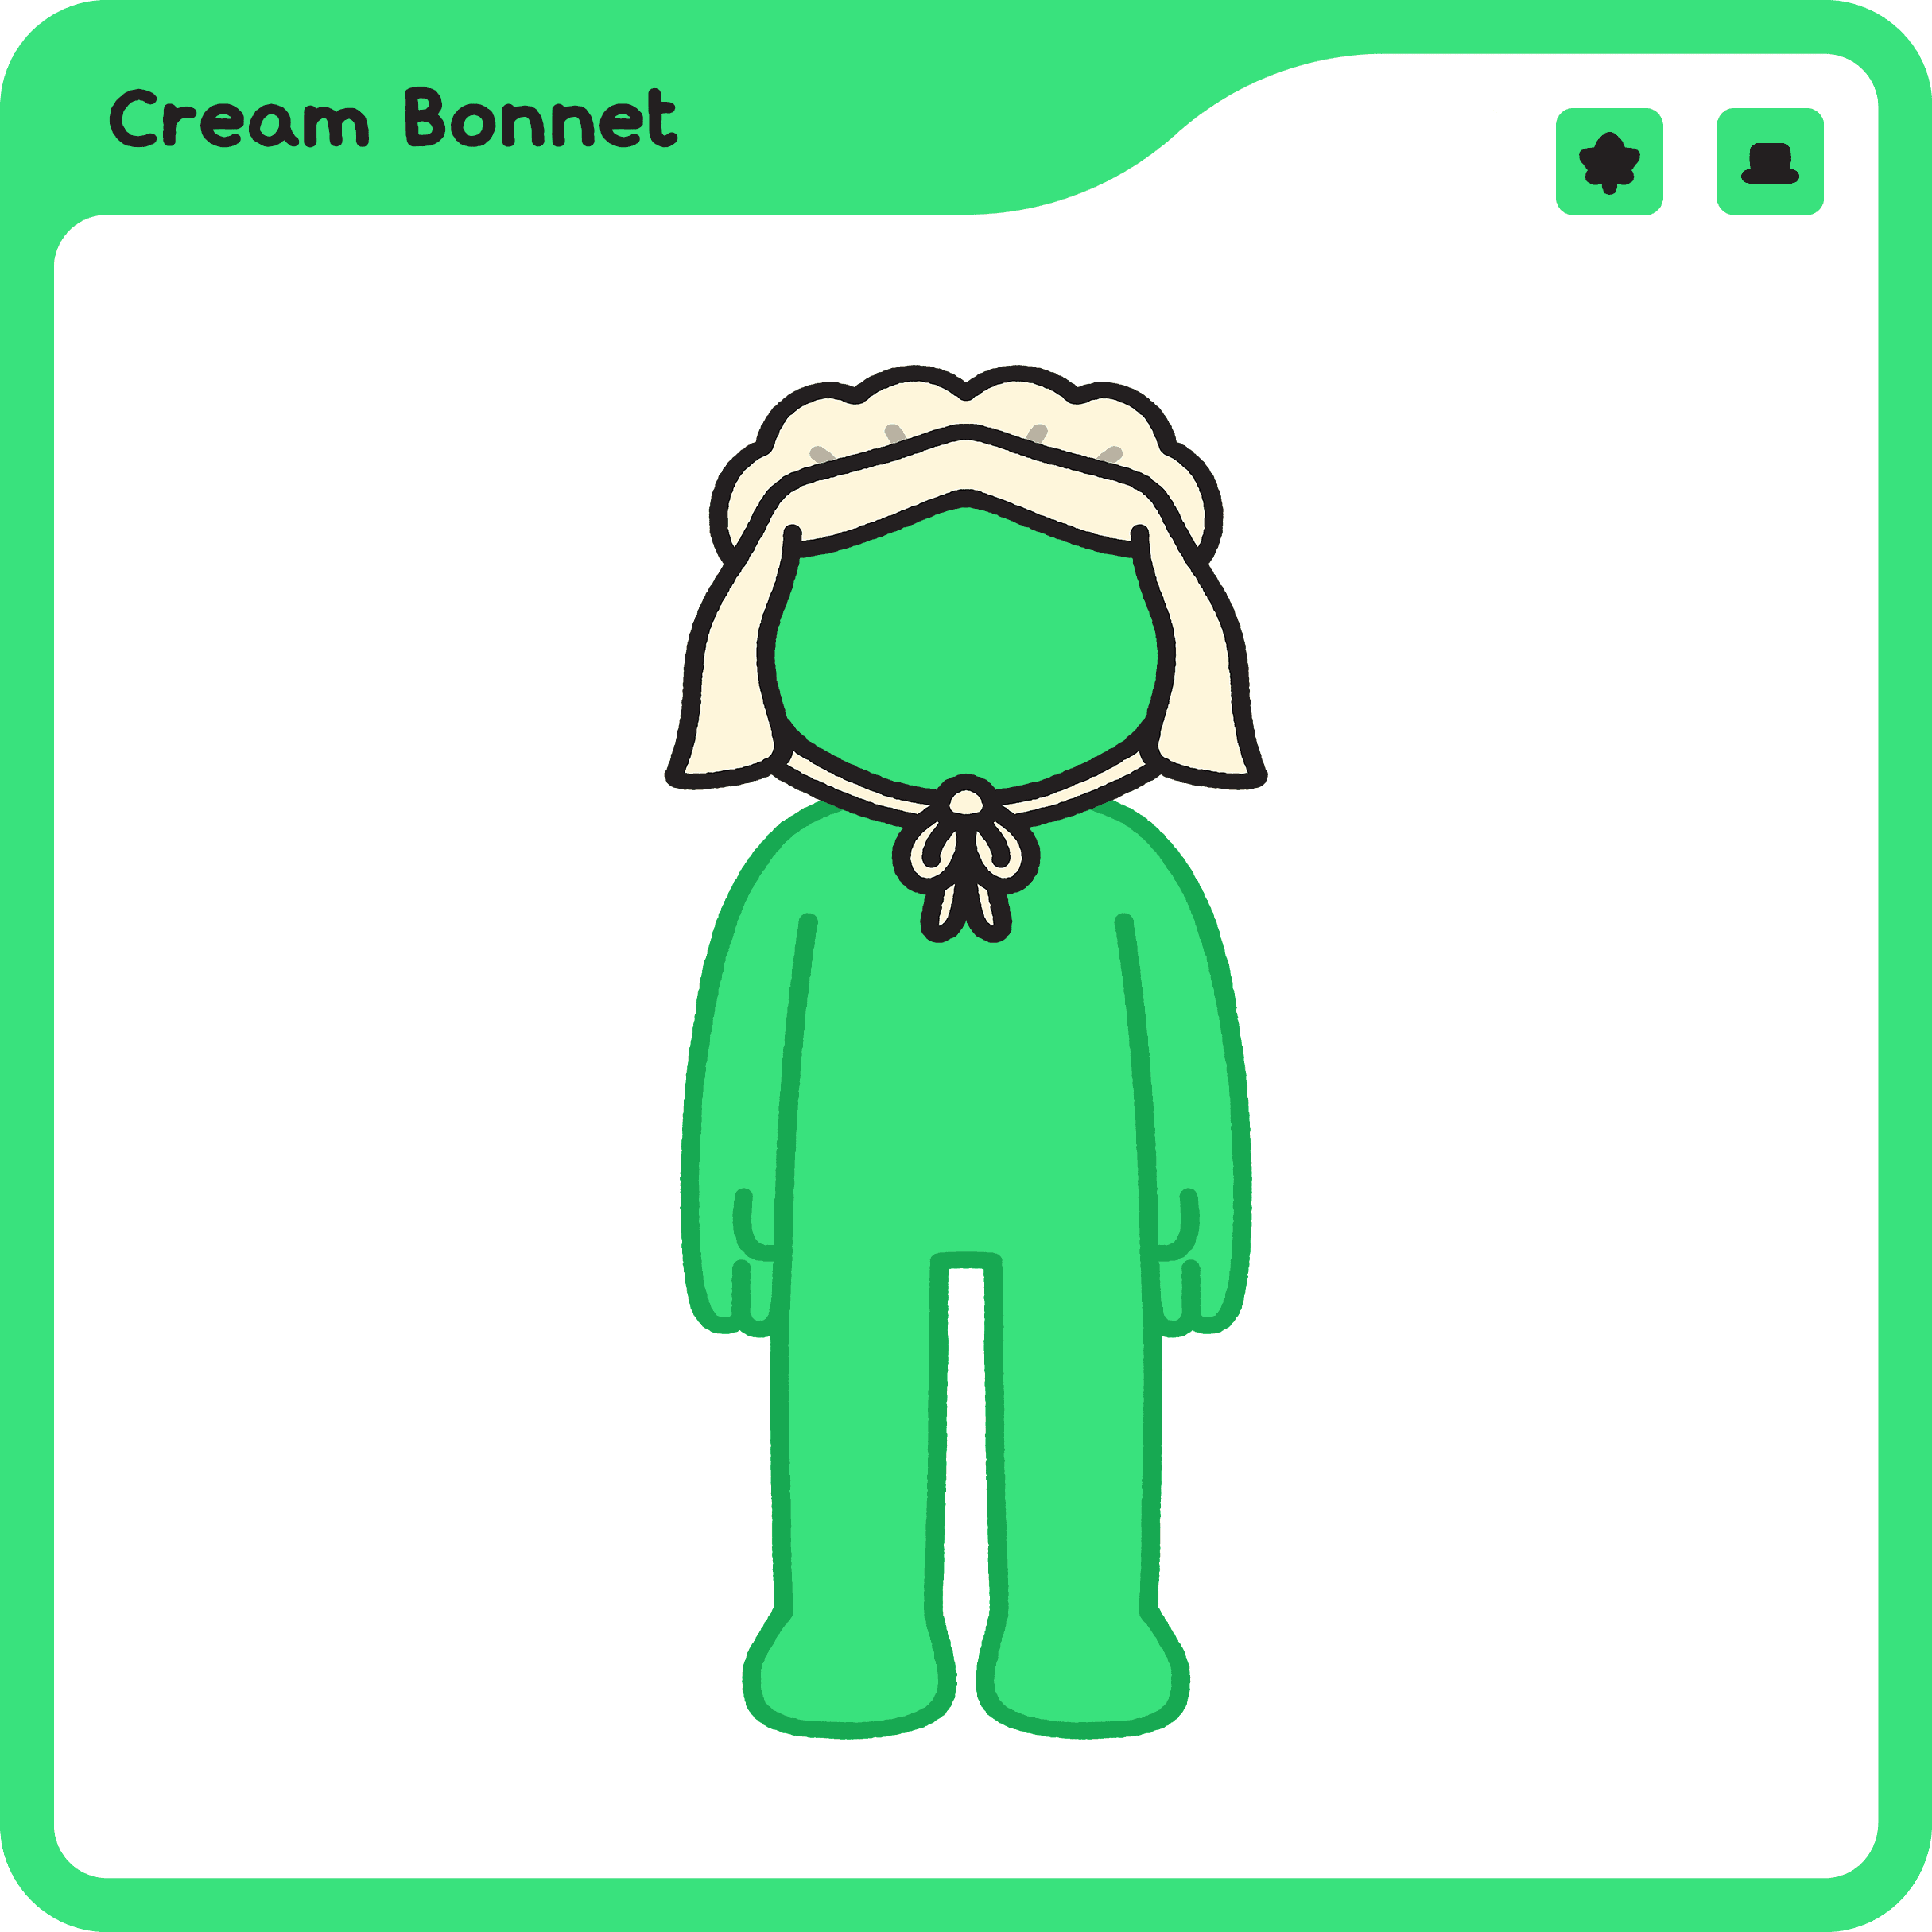 Cream Bonnet